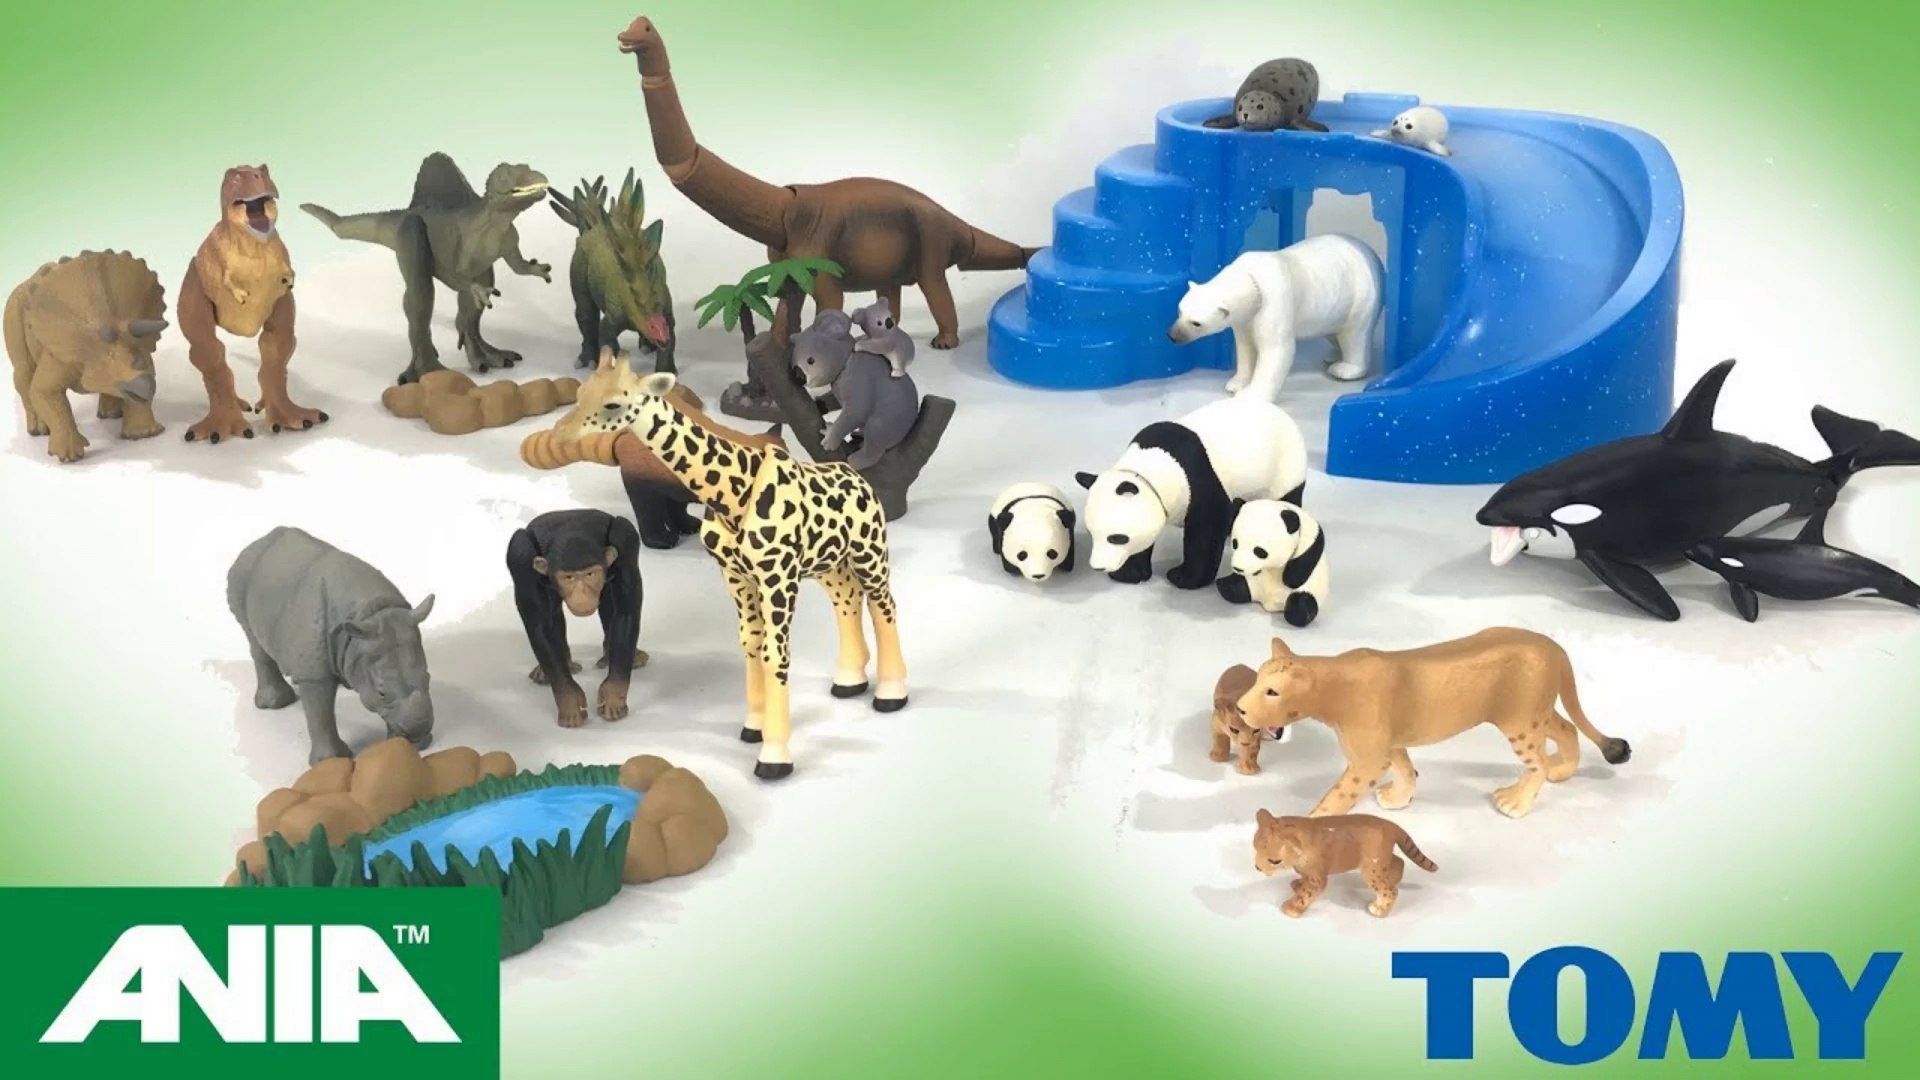 Tomy ANIA Dinosaurs Safari Wildlife Animals Zoo Killer Whale Toy Unboxing  || Keith's Toy Box - video Dailymotion